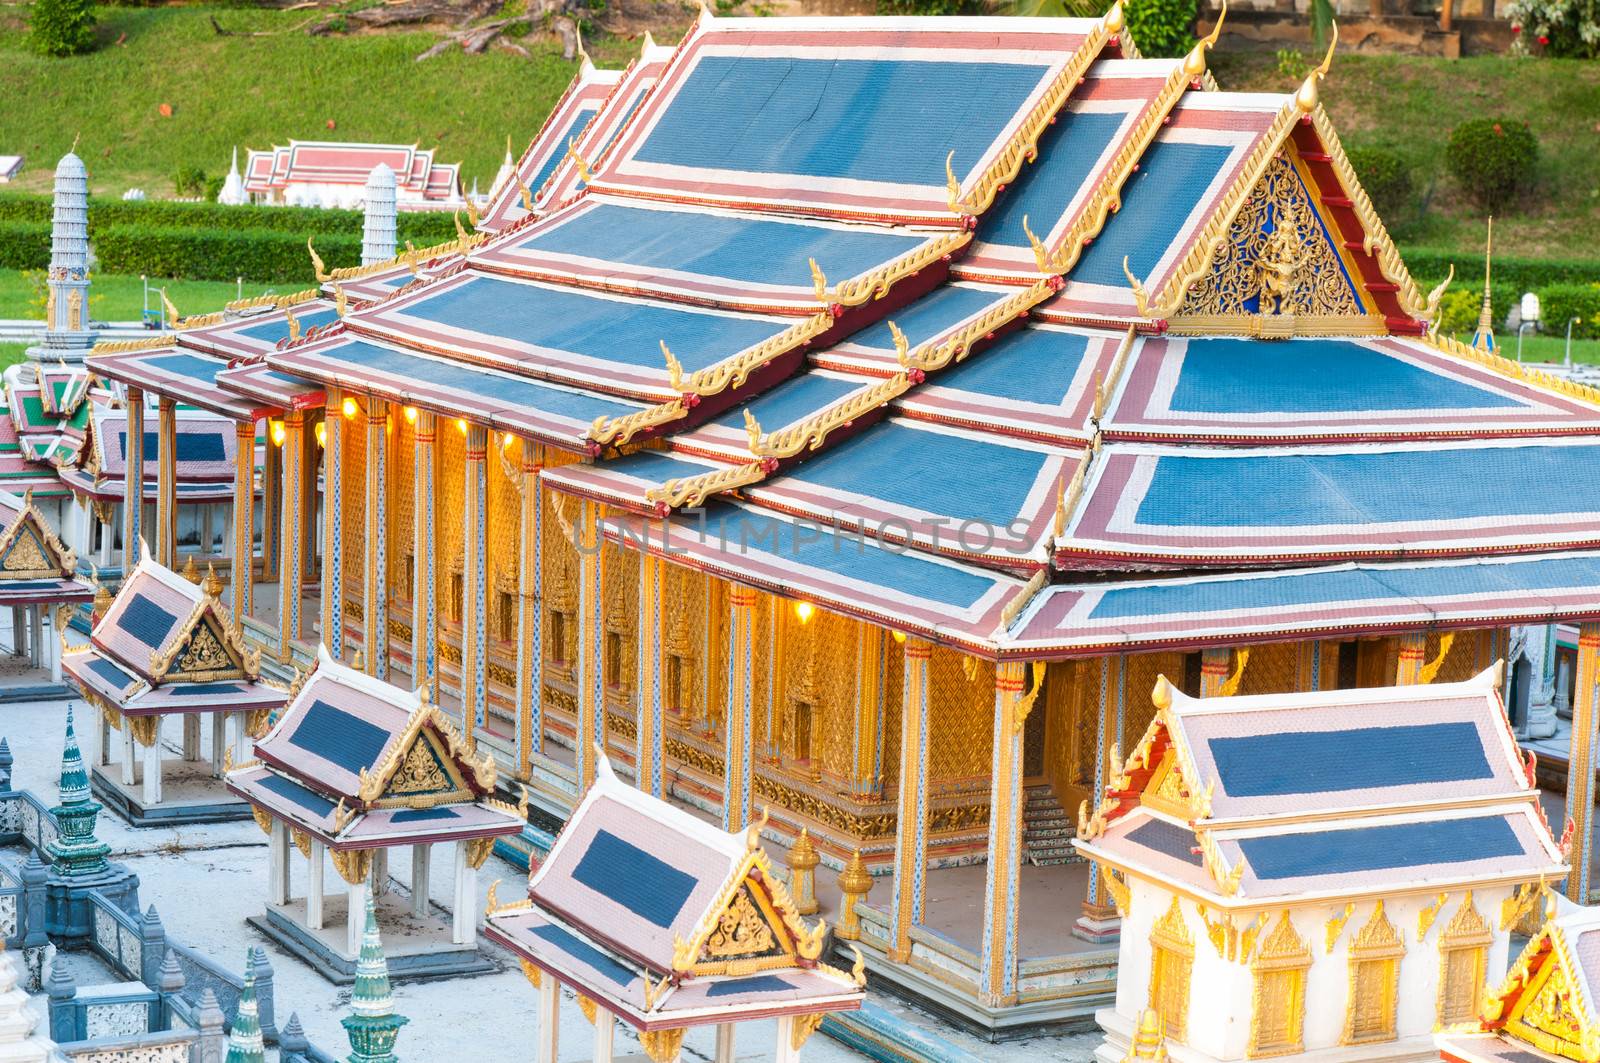 The royal temple of the emerald budoha mini siam by Sorapop